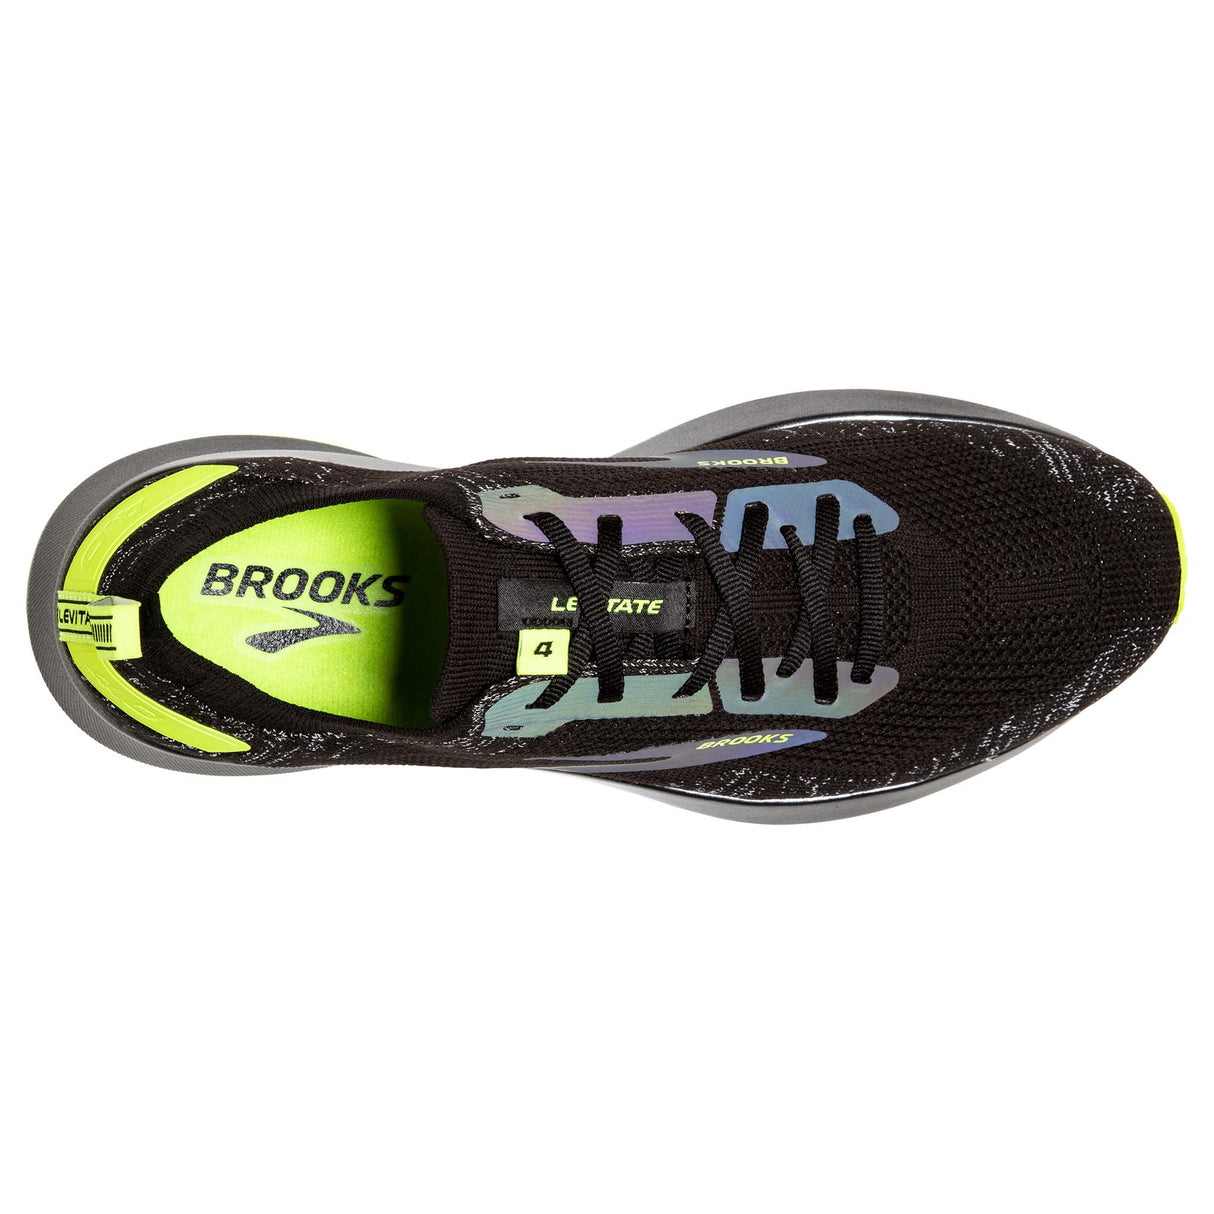 Brooks Levitate 4 Nightlife chaussures de course a pied pour femme tige